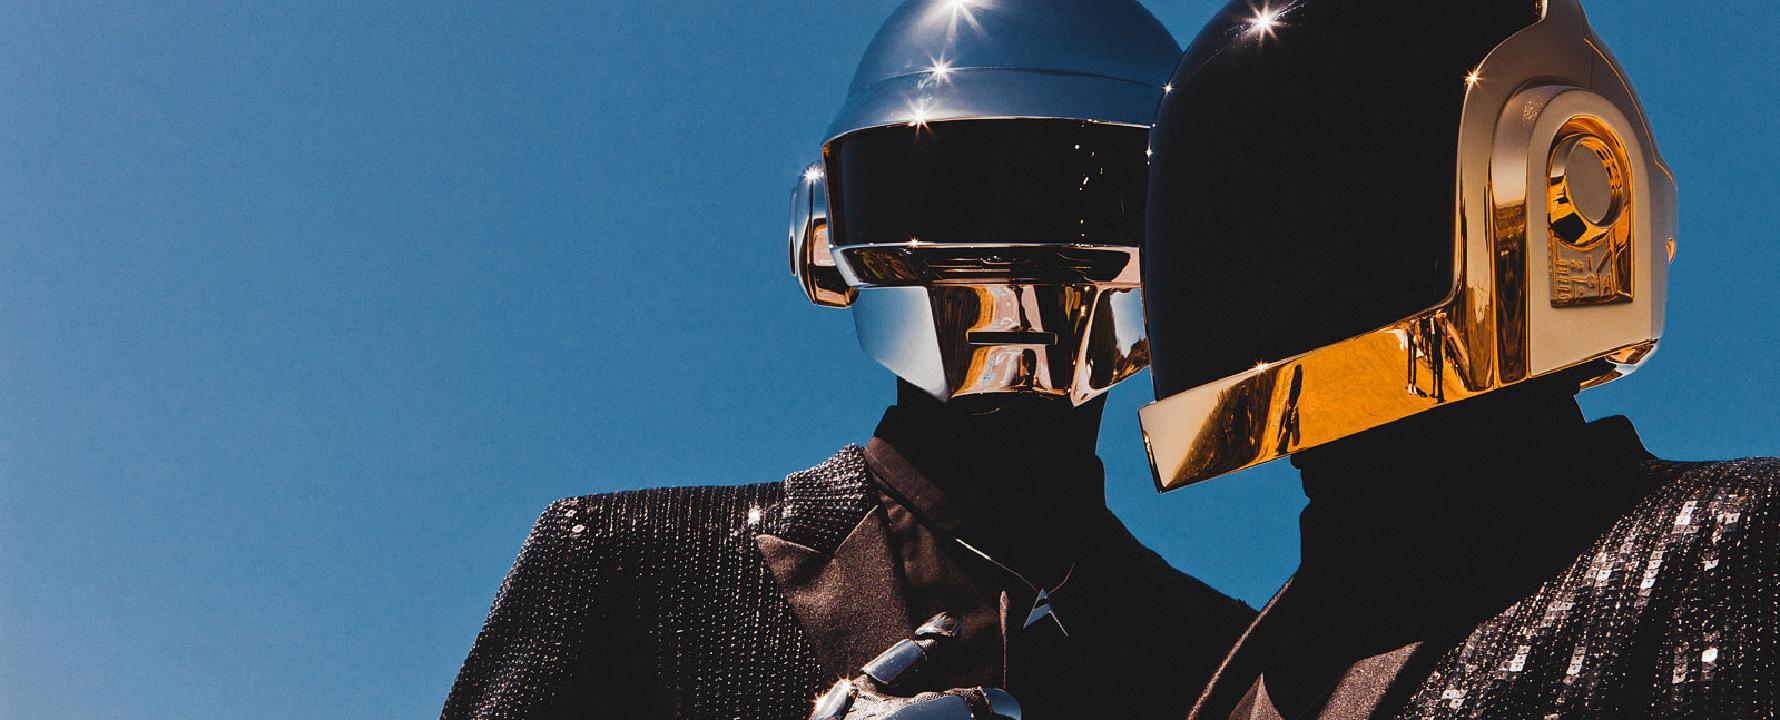 Fotografía promocional de Daft Punk